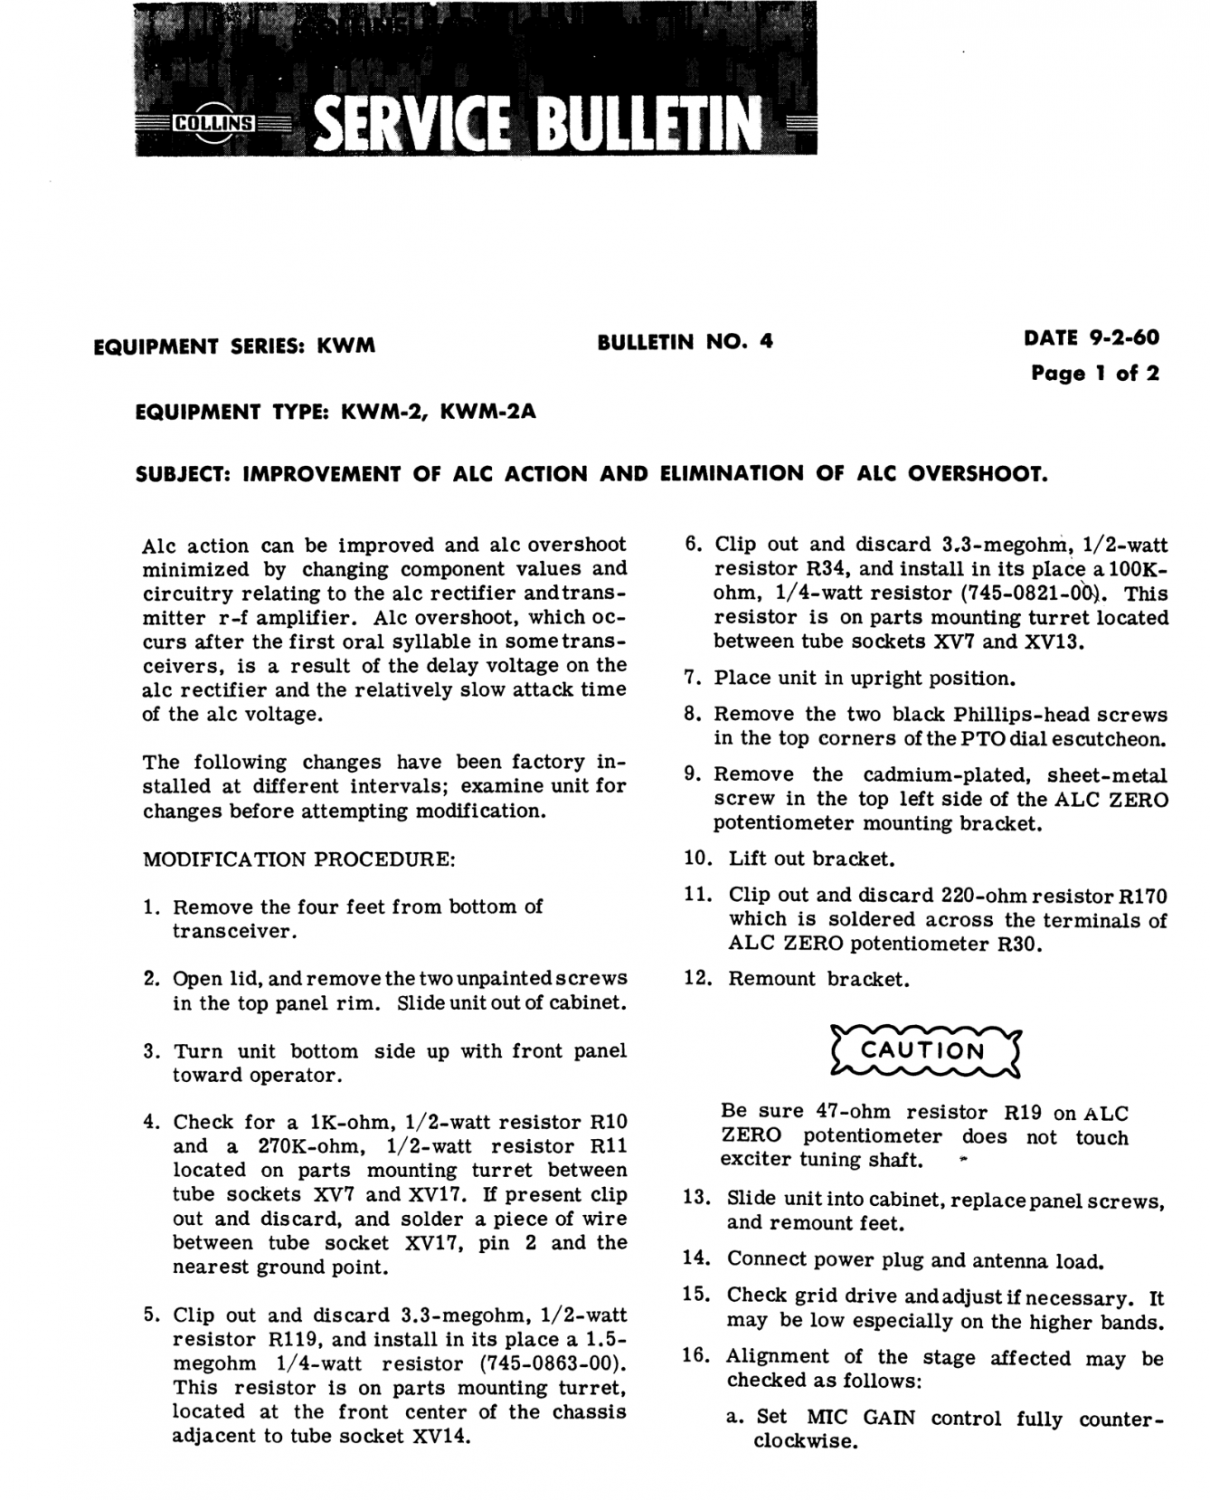 Collins KWM-2A Transceiver - Service Bulletin Number 4 - (1960-09)